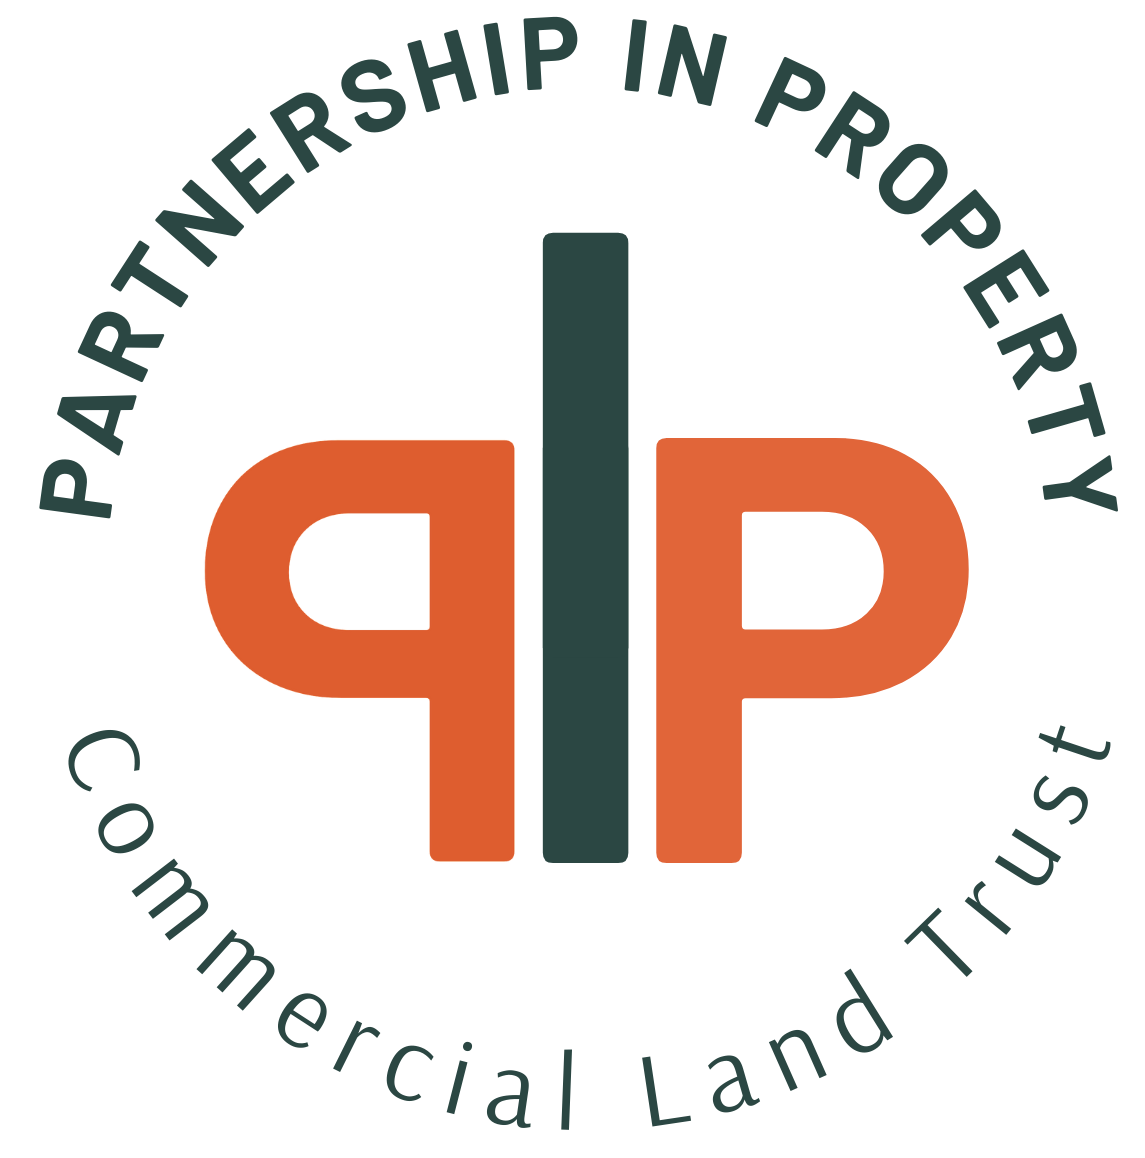 Partnership in Property